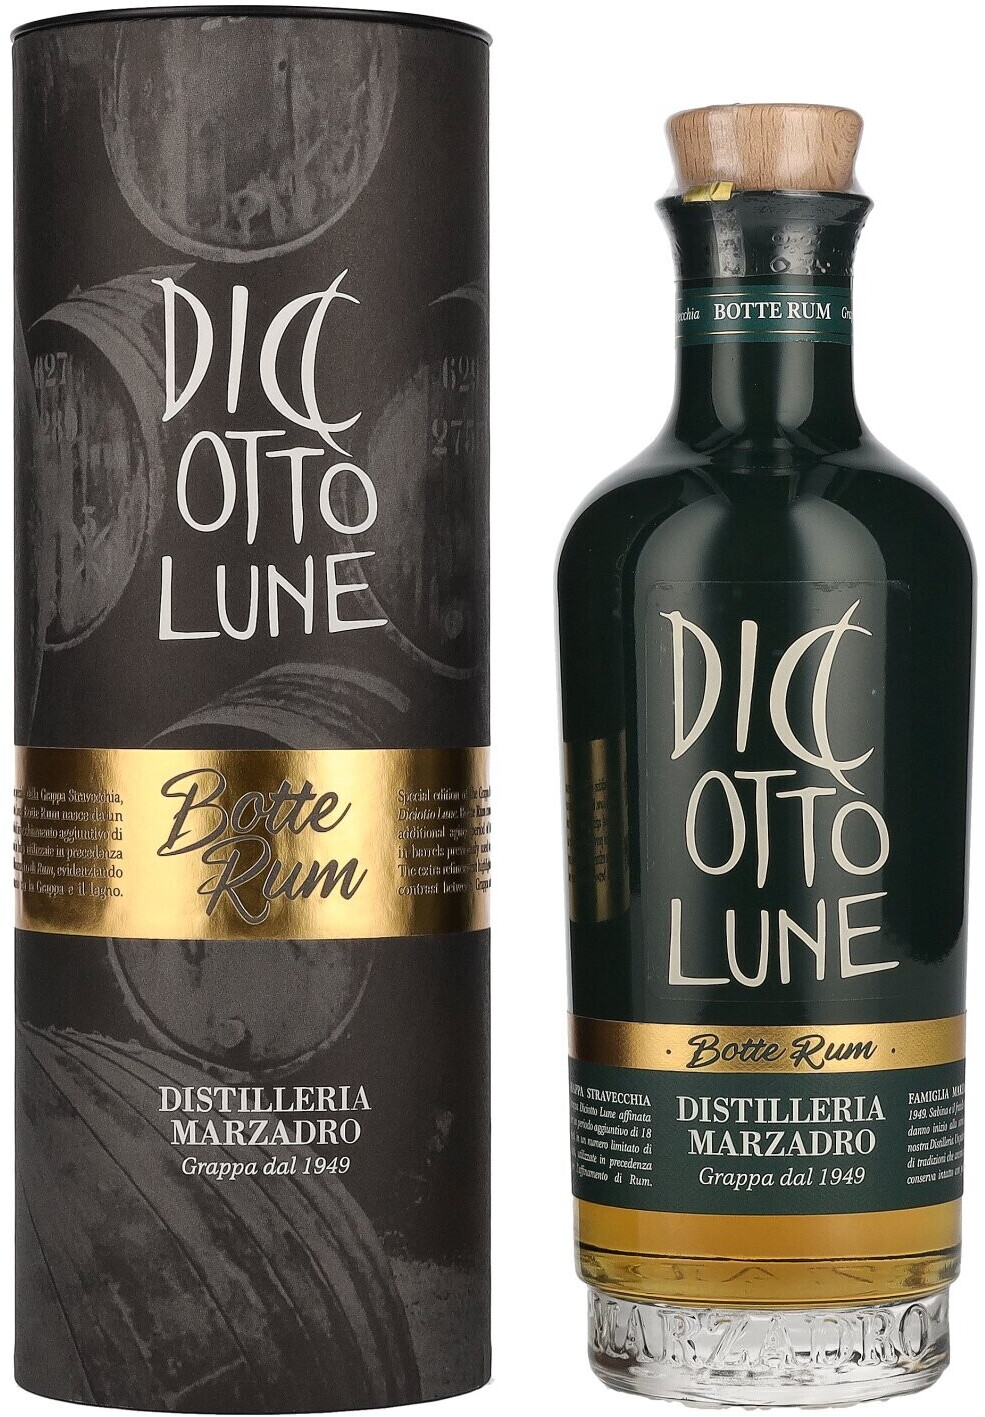 26,90 bei Marzadro € Diciotto ab 42% Rum | Lune 0,5l Botte Preisvergleich